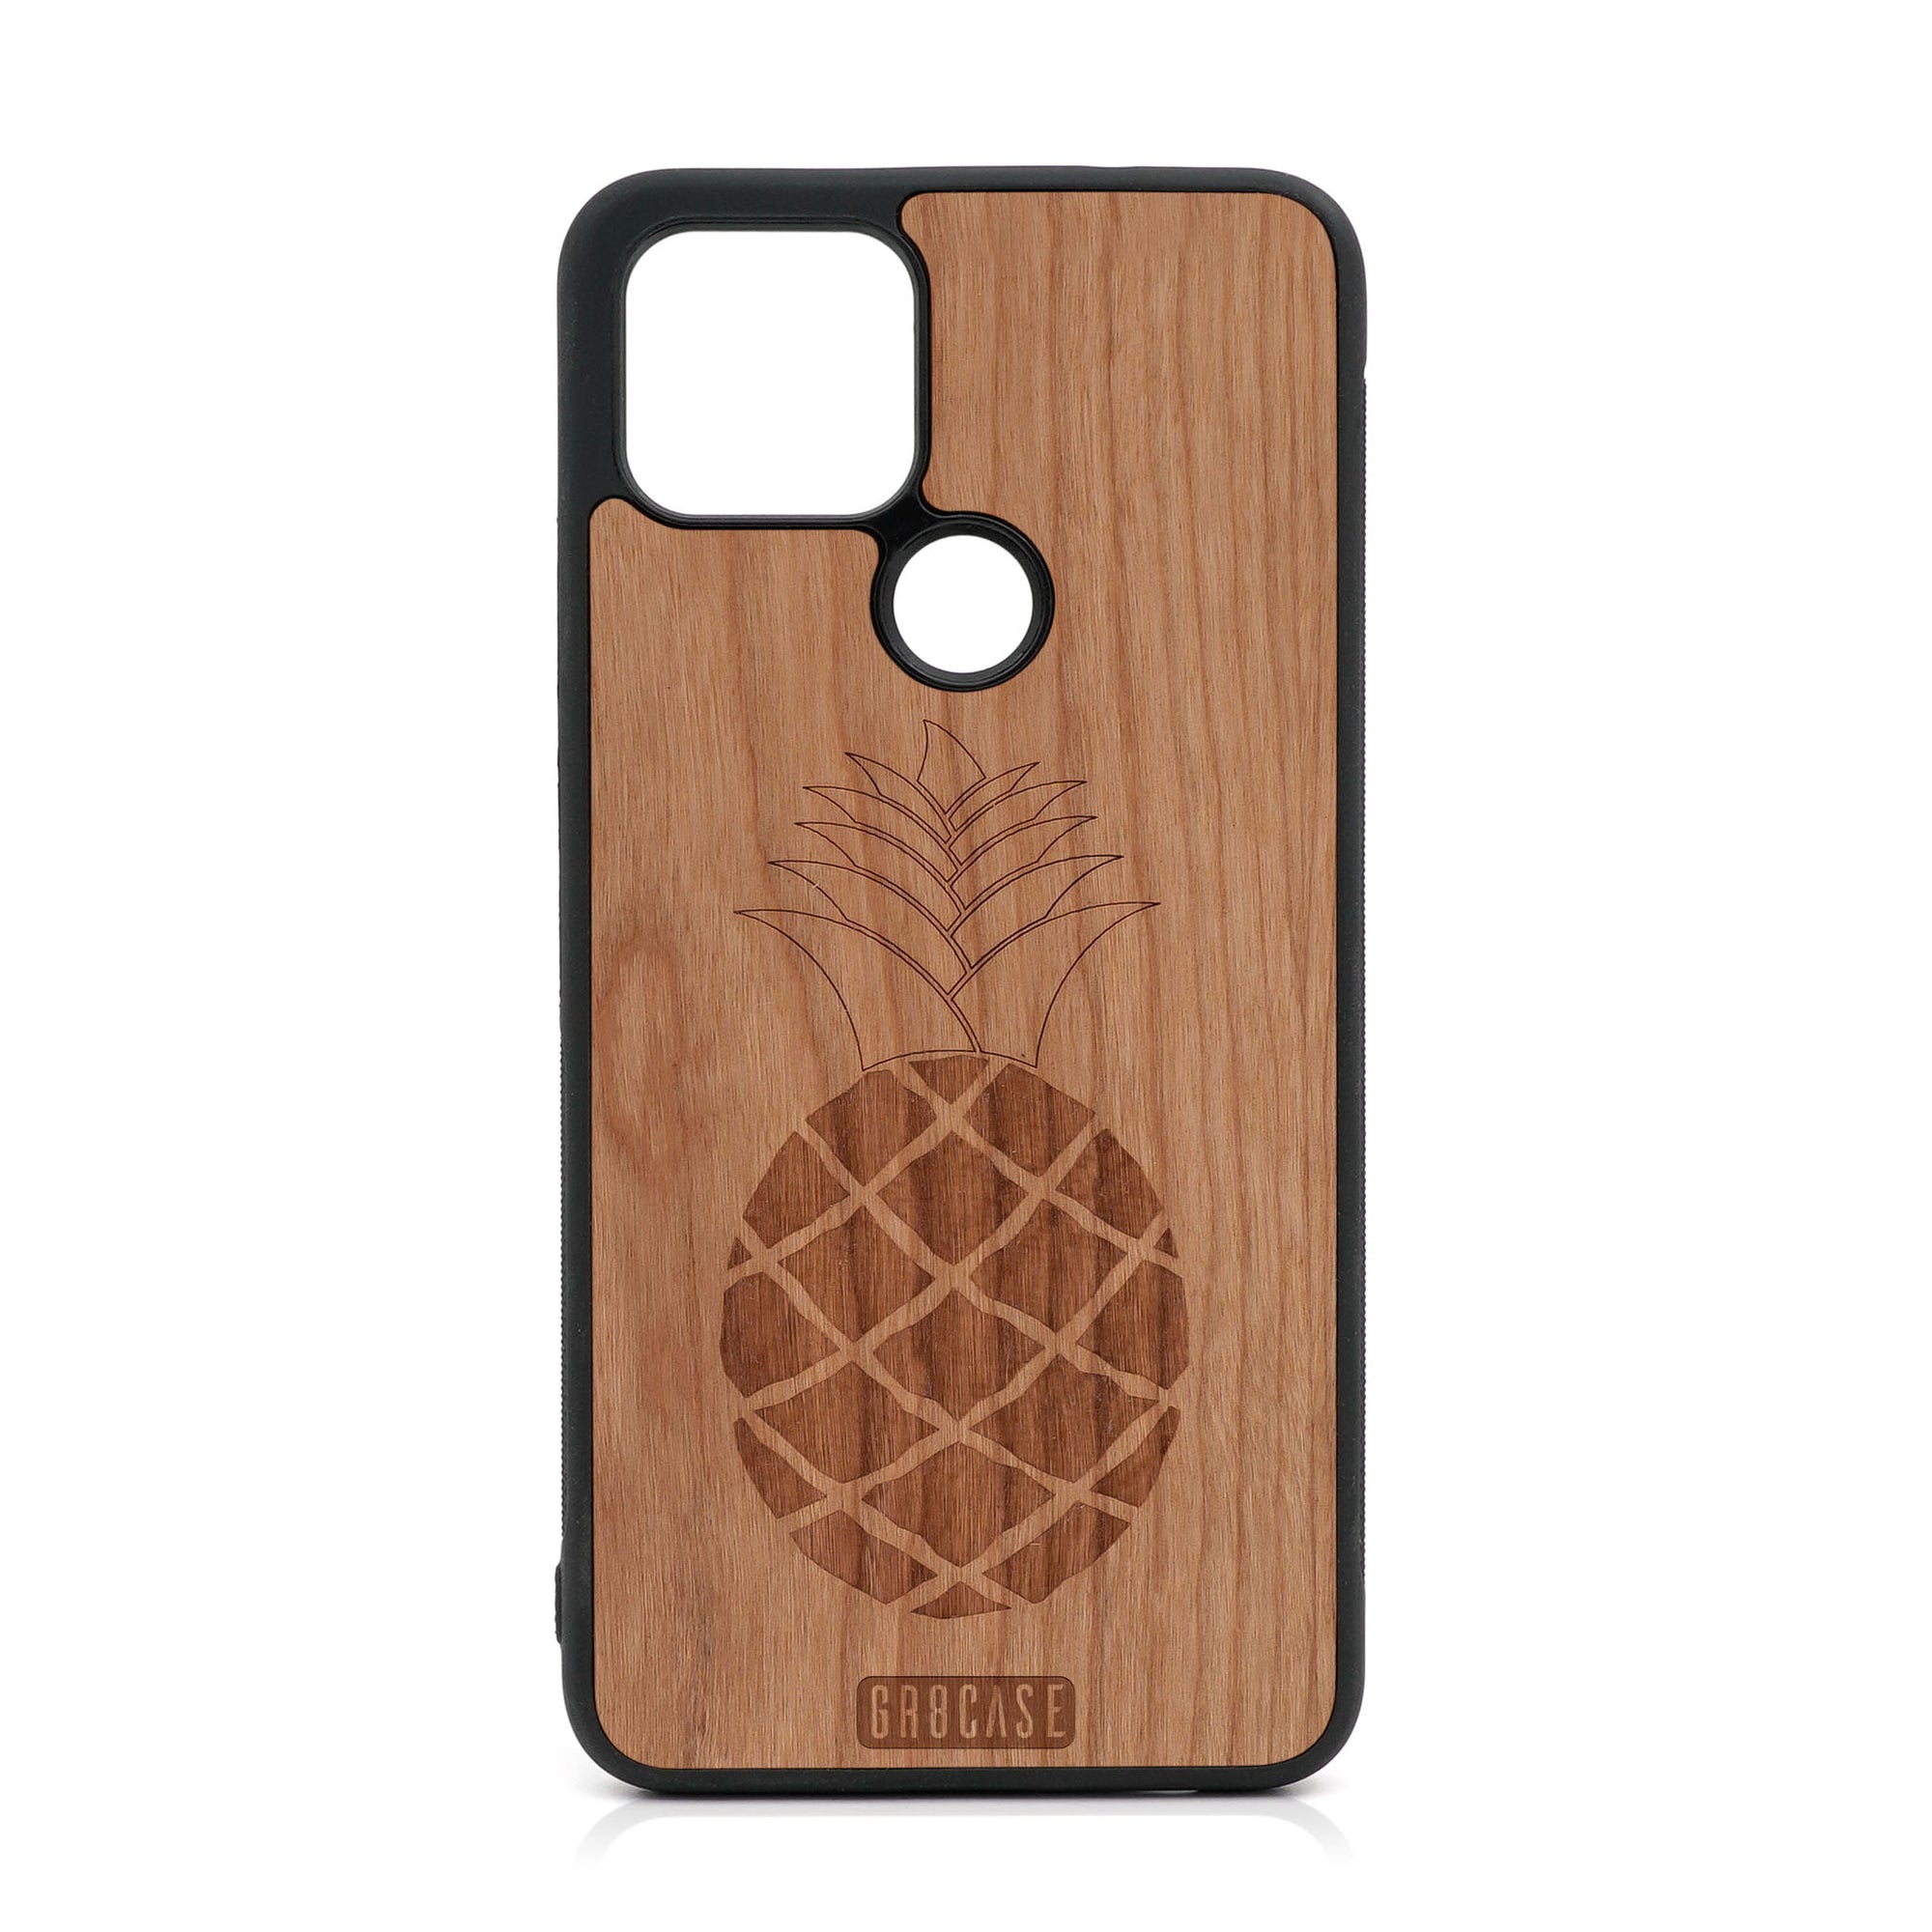 Pineapple Design Wood Case For Google Pixel 5 XL/4A 5G